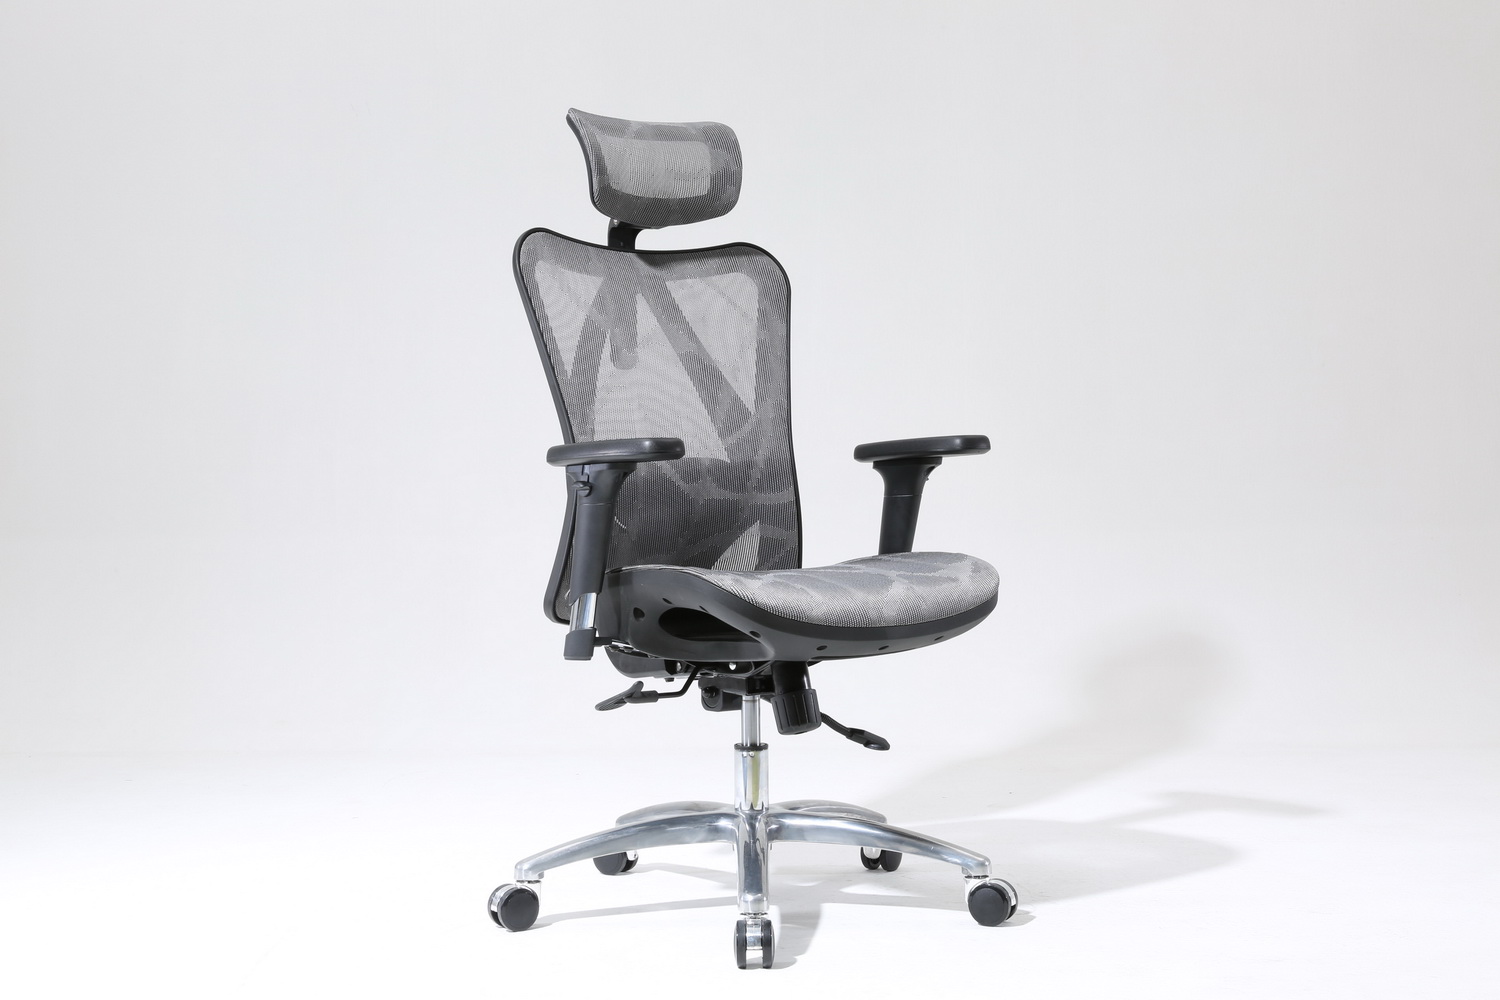 SIHOO M57 Ergonomic Office Chair Desk - (Grey Frame with Grey Mesh